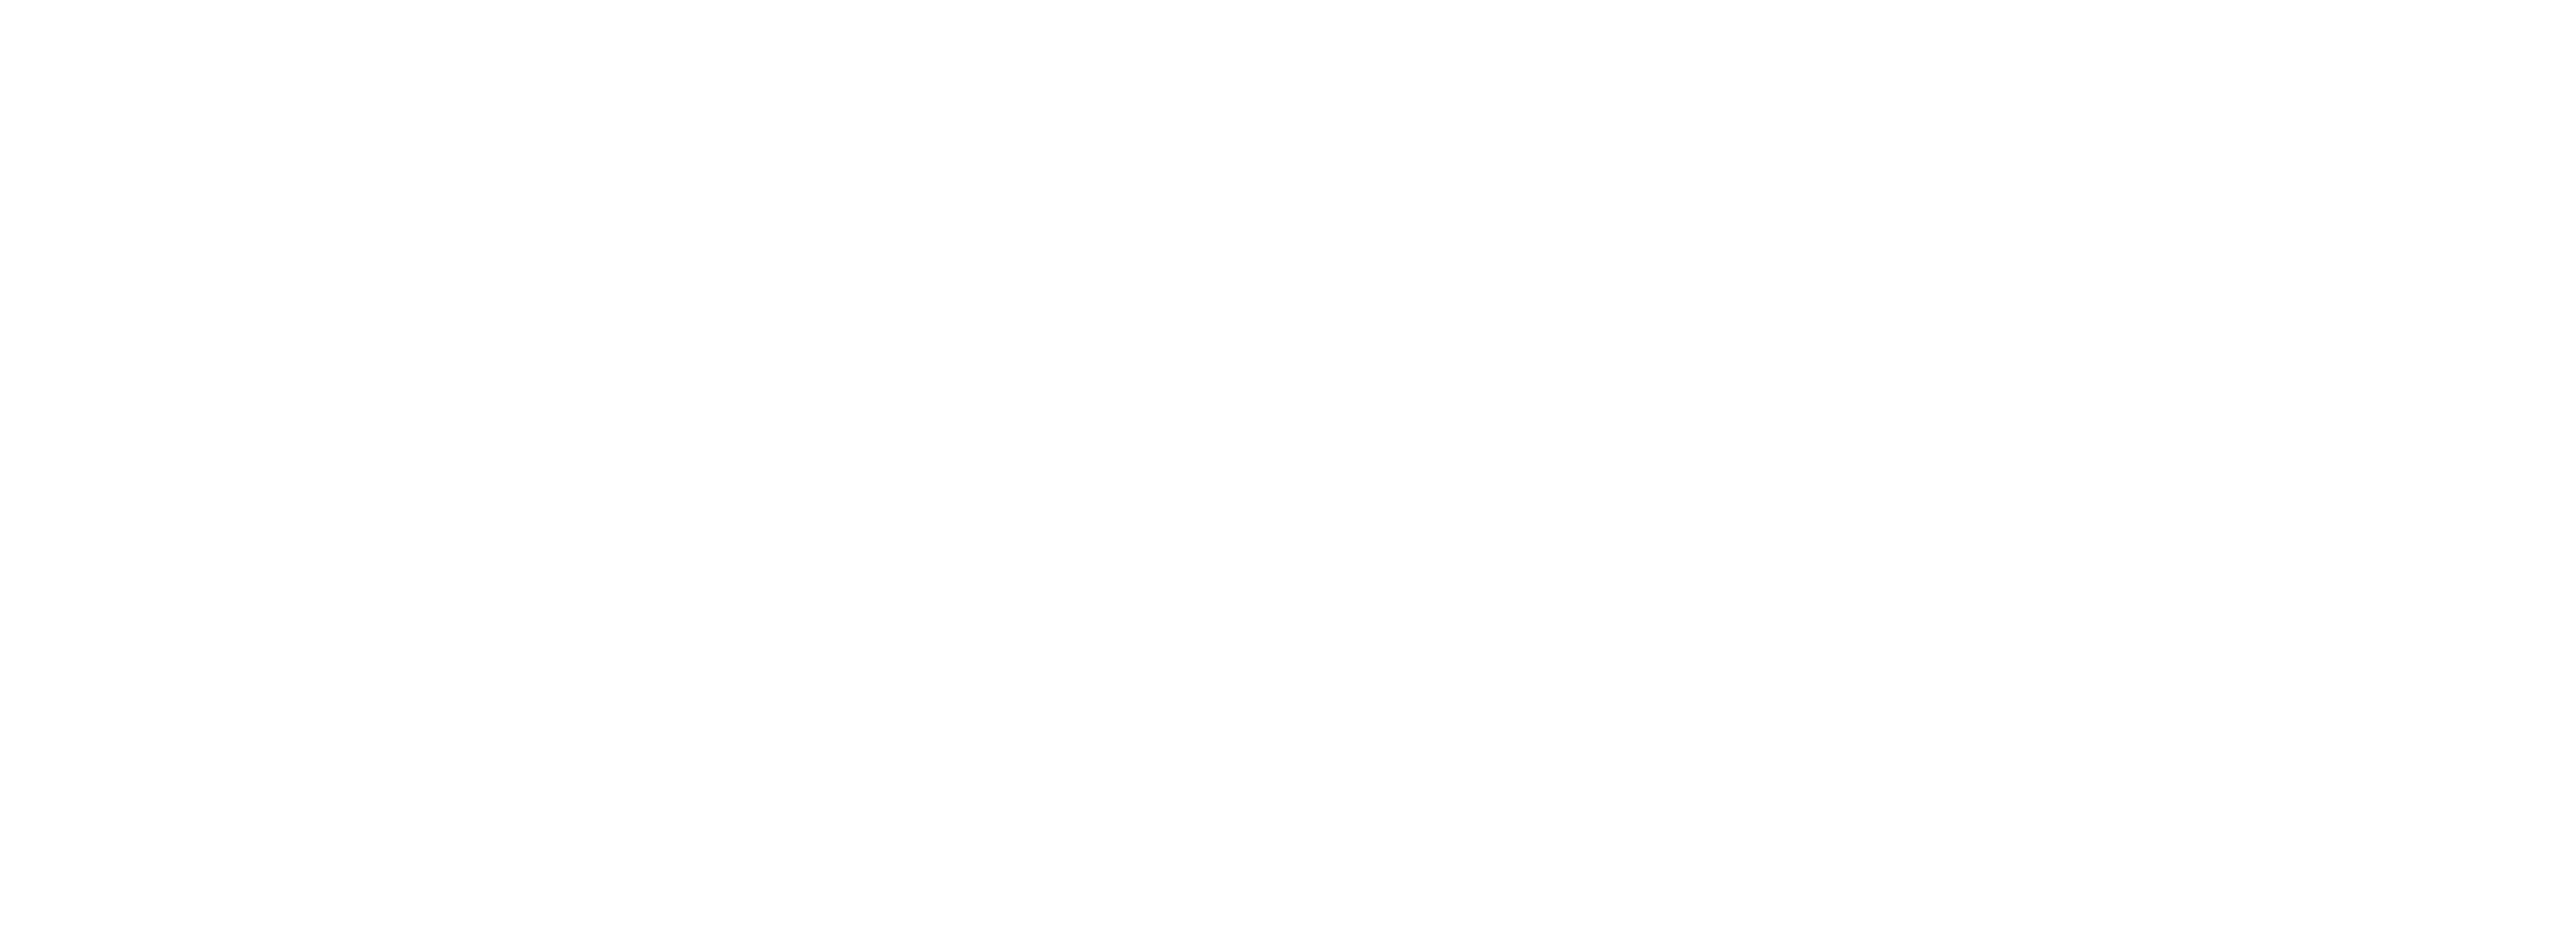 CONBEA - CONGRESSO BRASILEIRO DE ENGENHARIA AGRÍCOLA